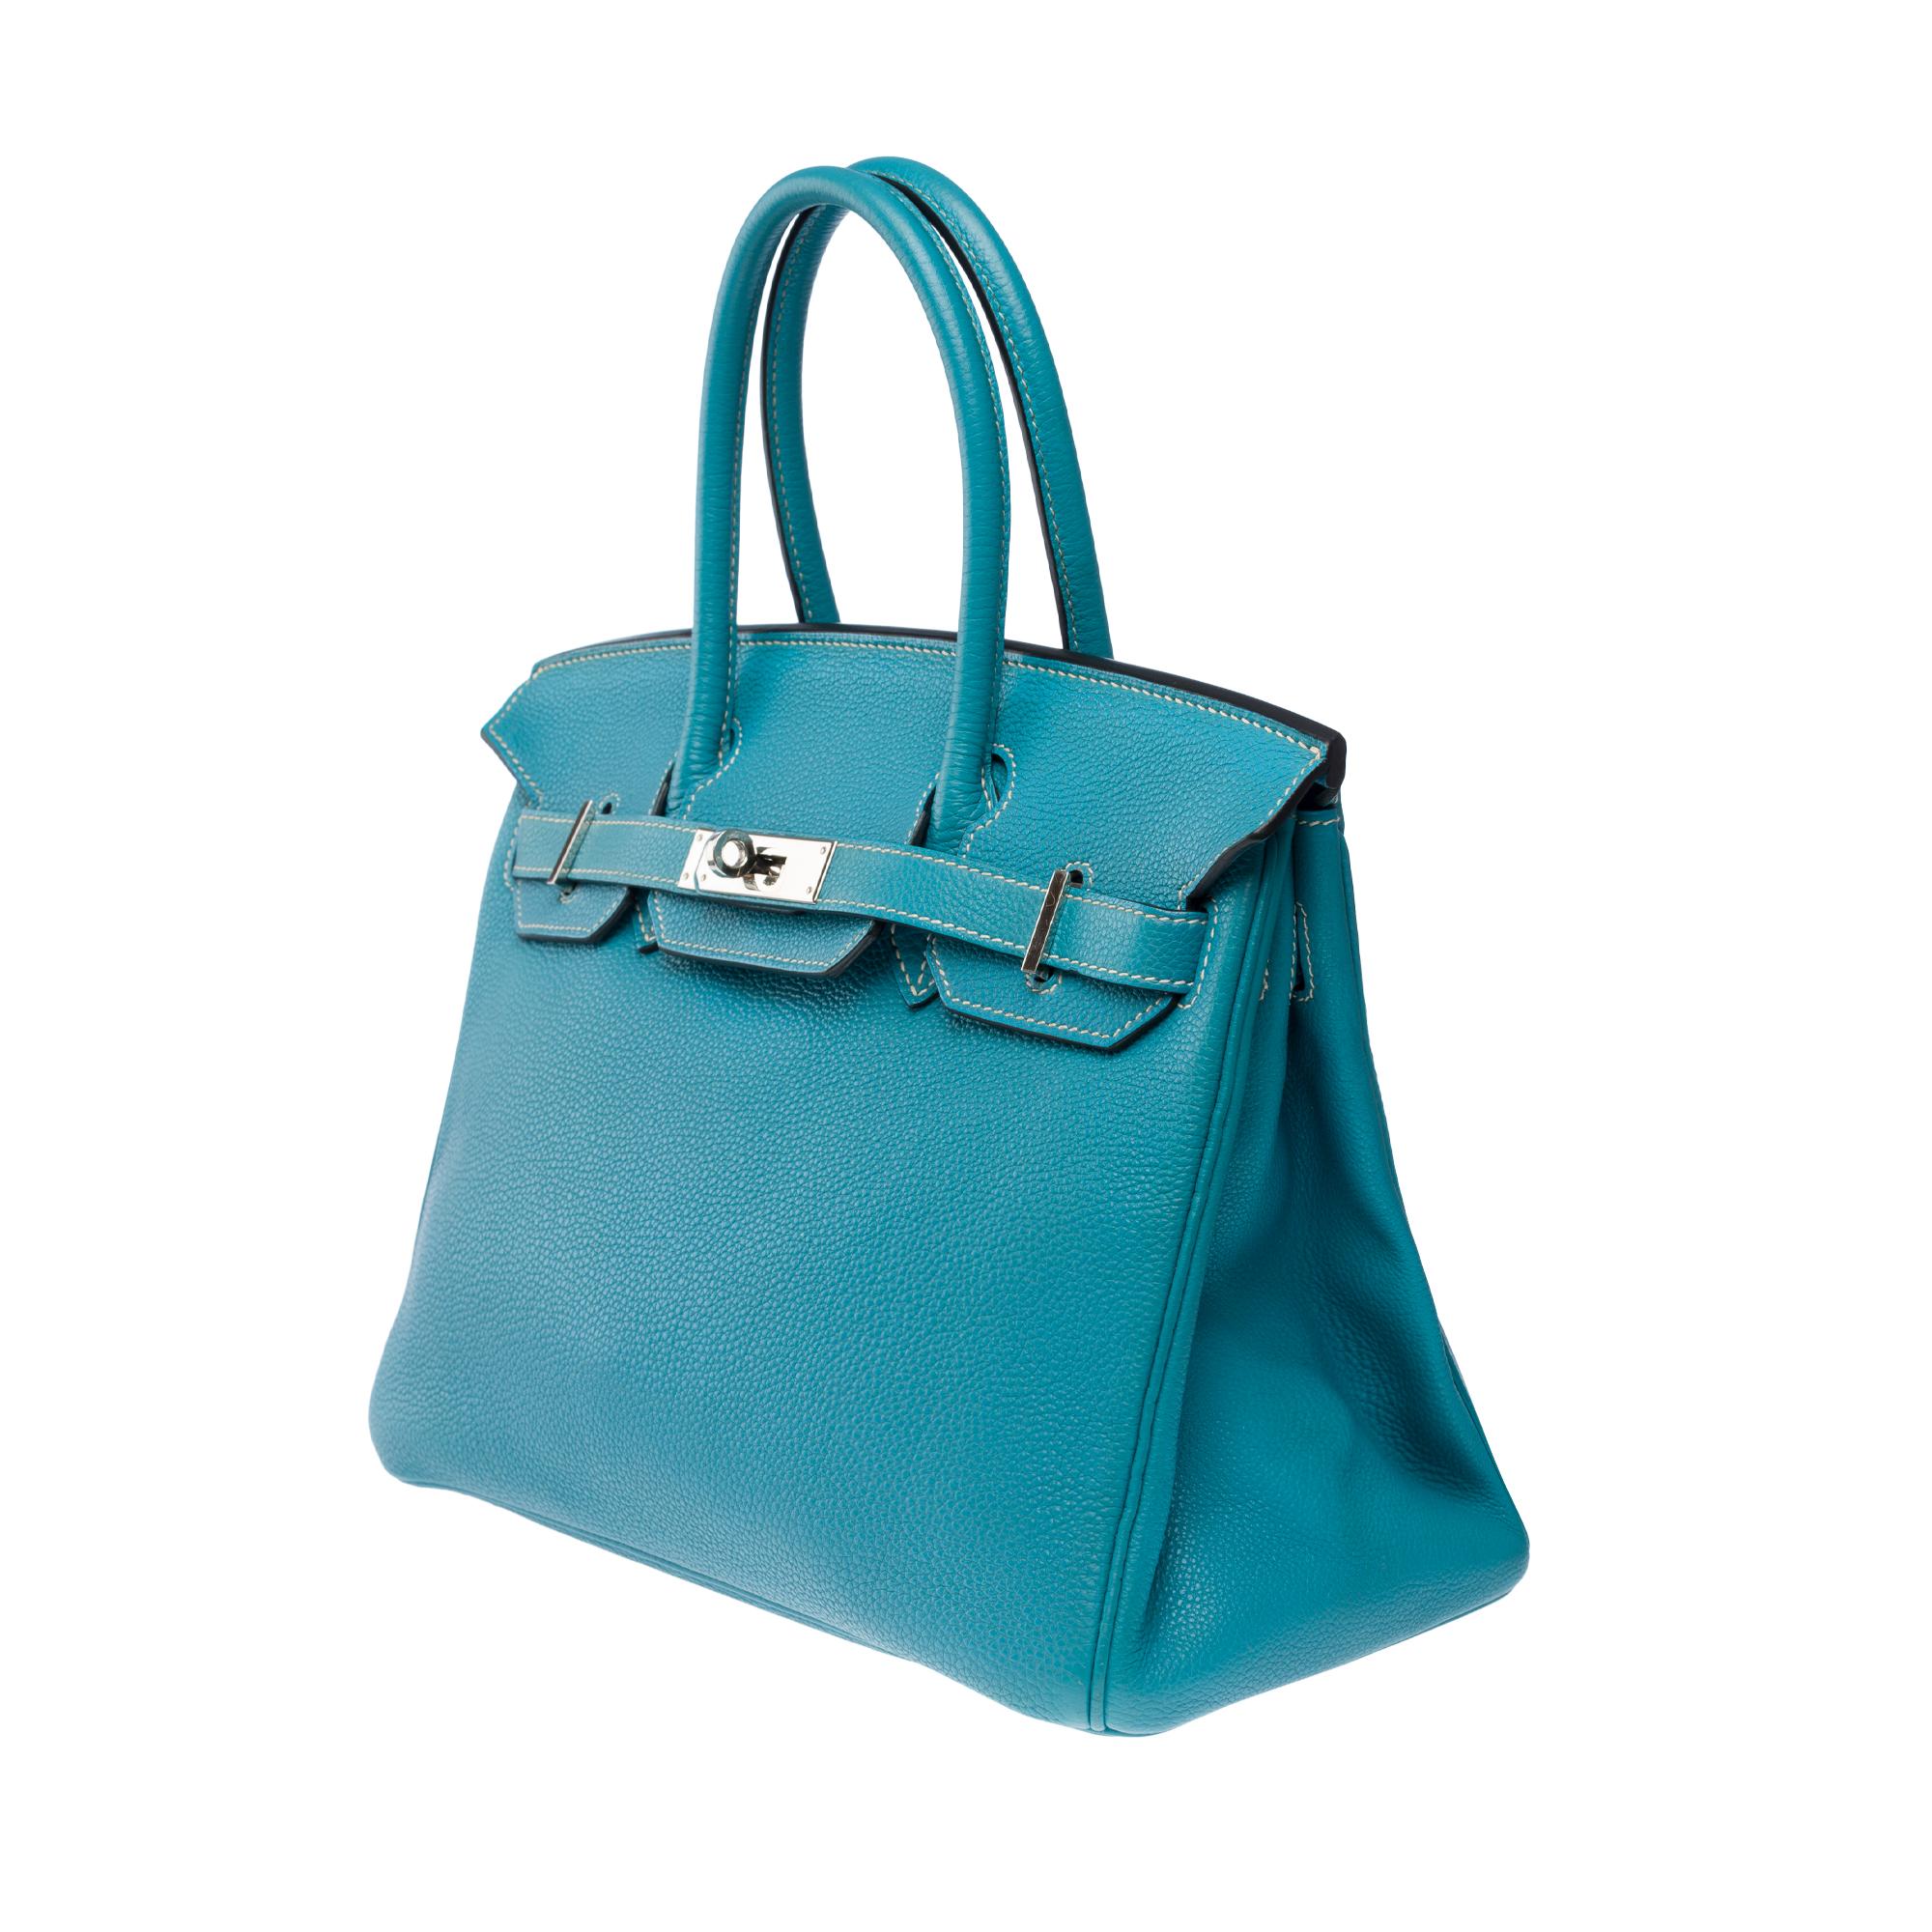 Splendid Hermes Birkin 30 handbag in Blue Jean Togo leather, SHW For Sale 1